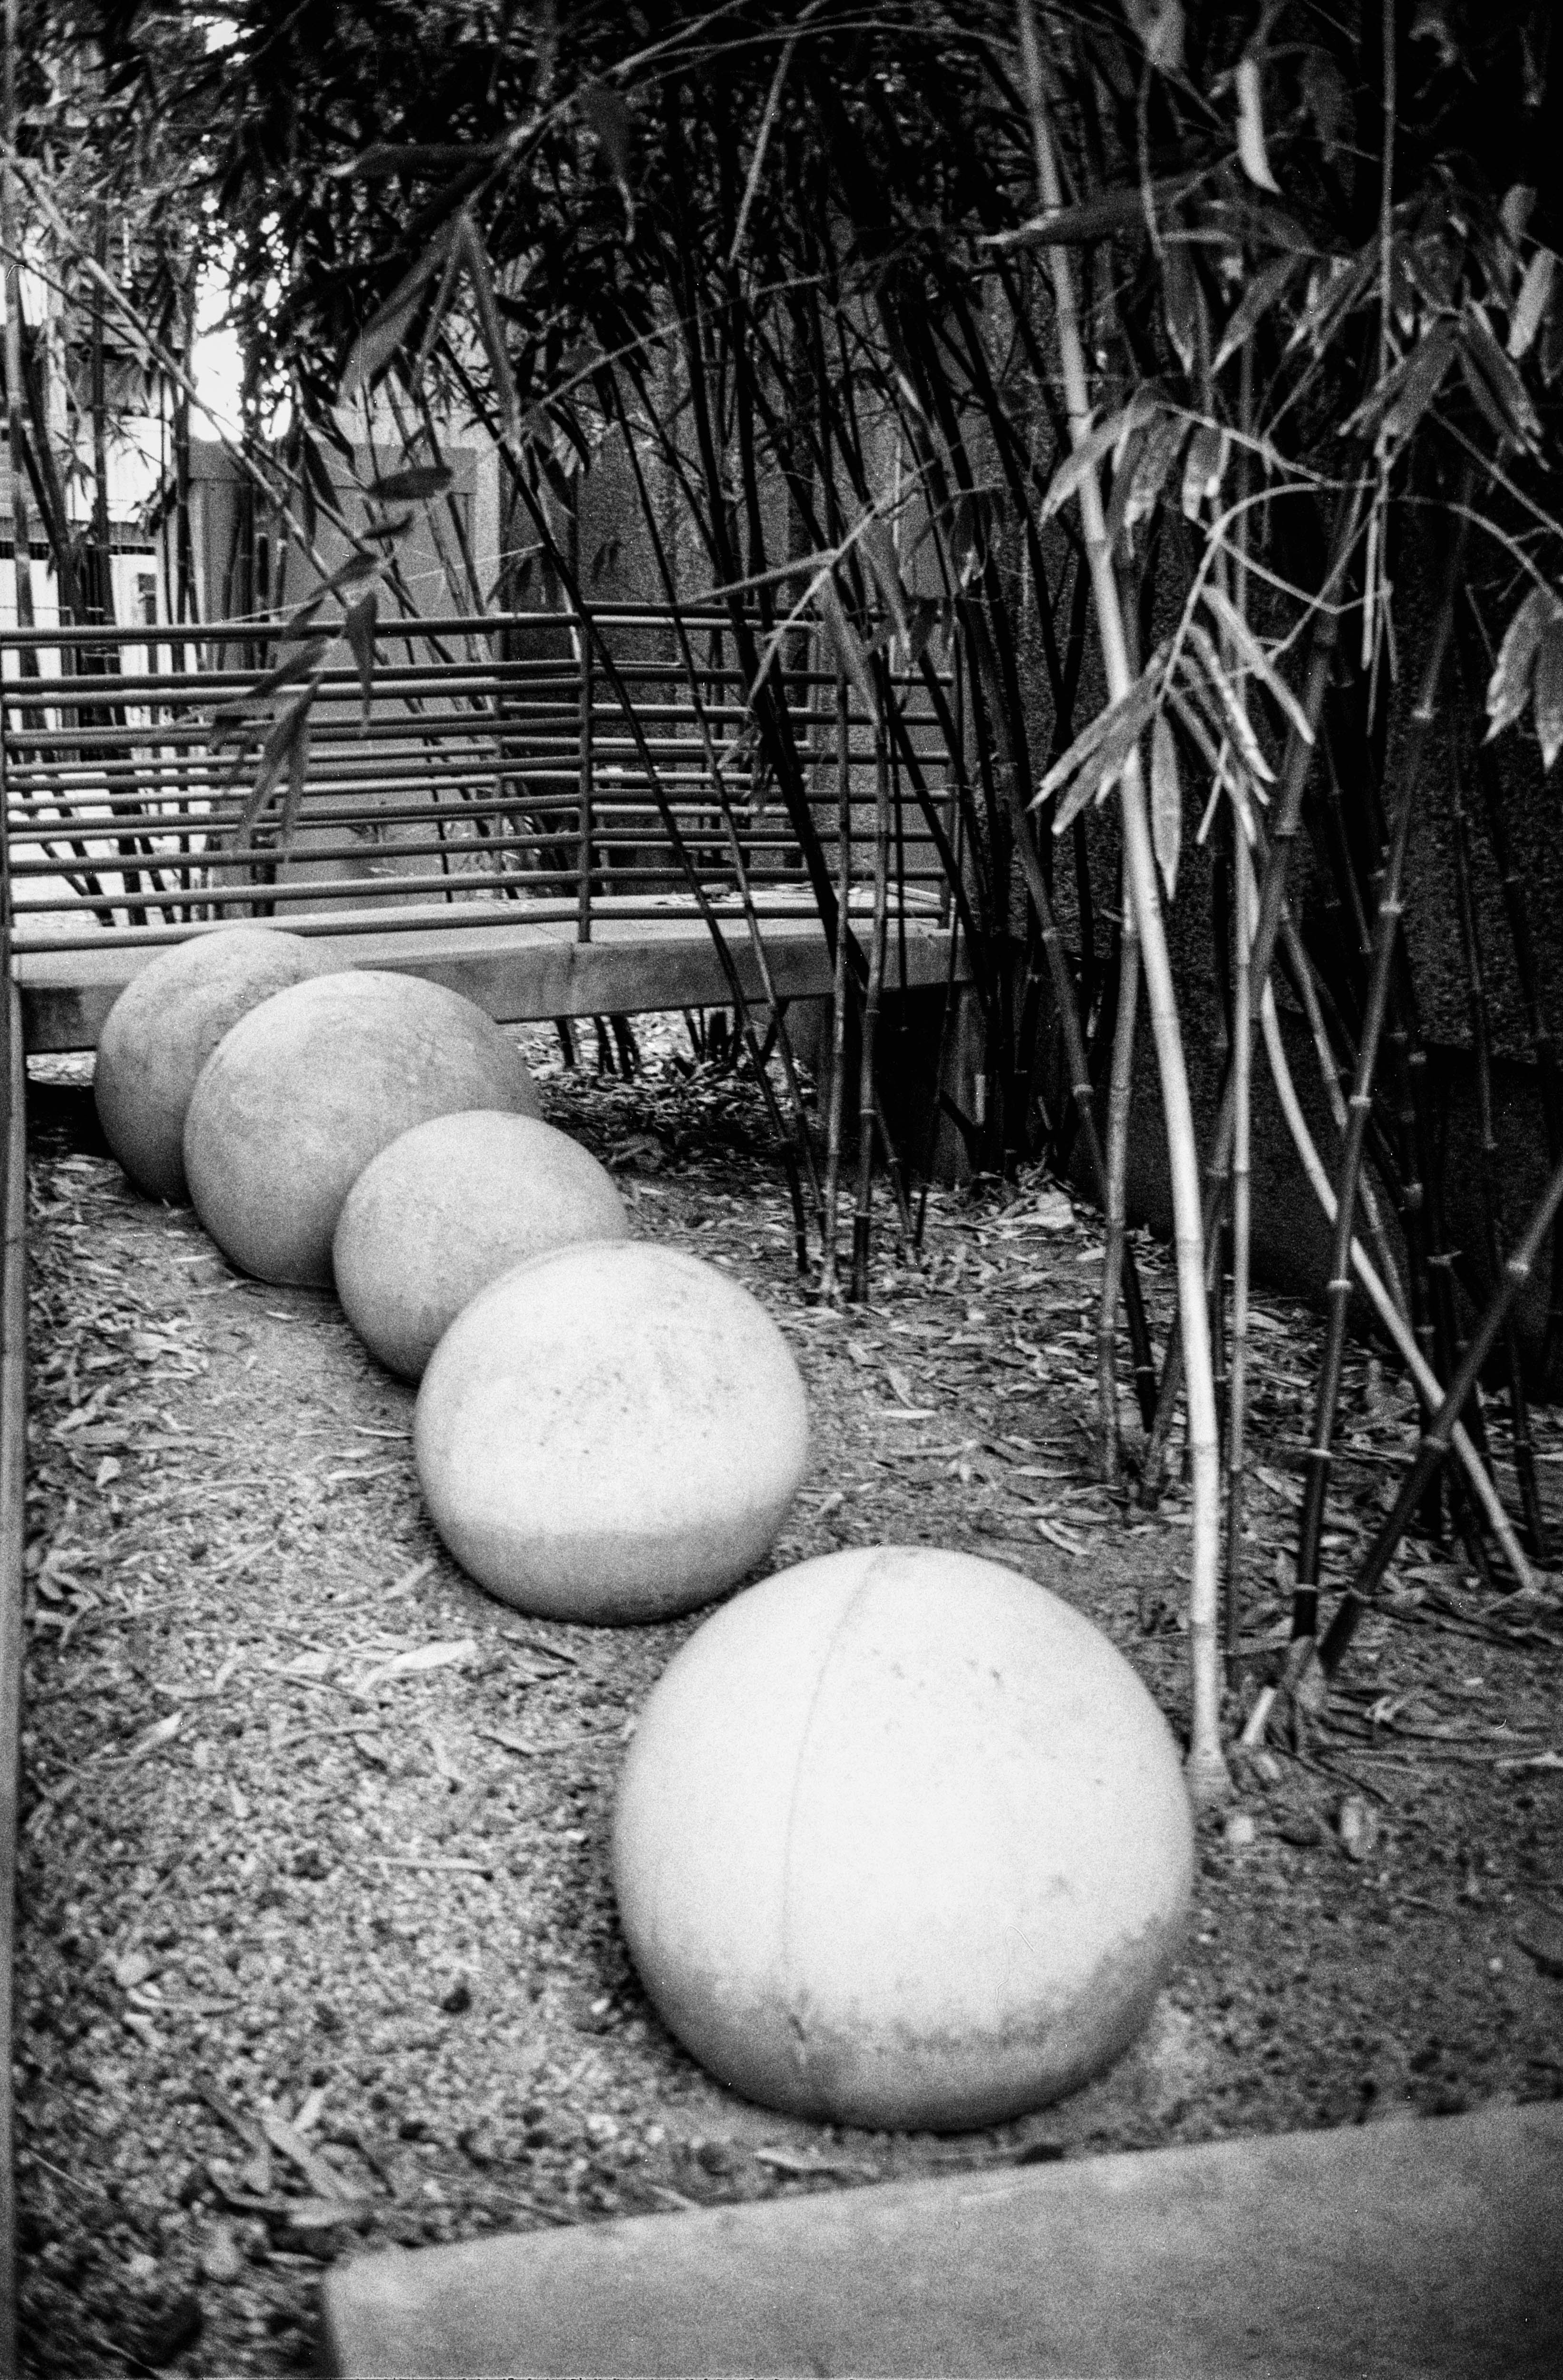 Bridge Spheres and Bamboo